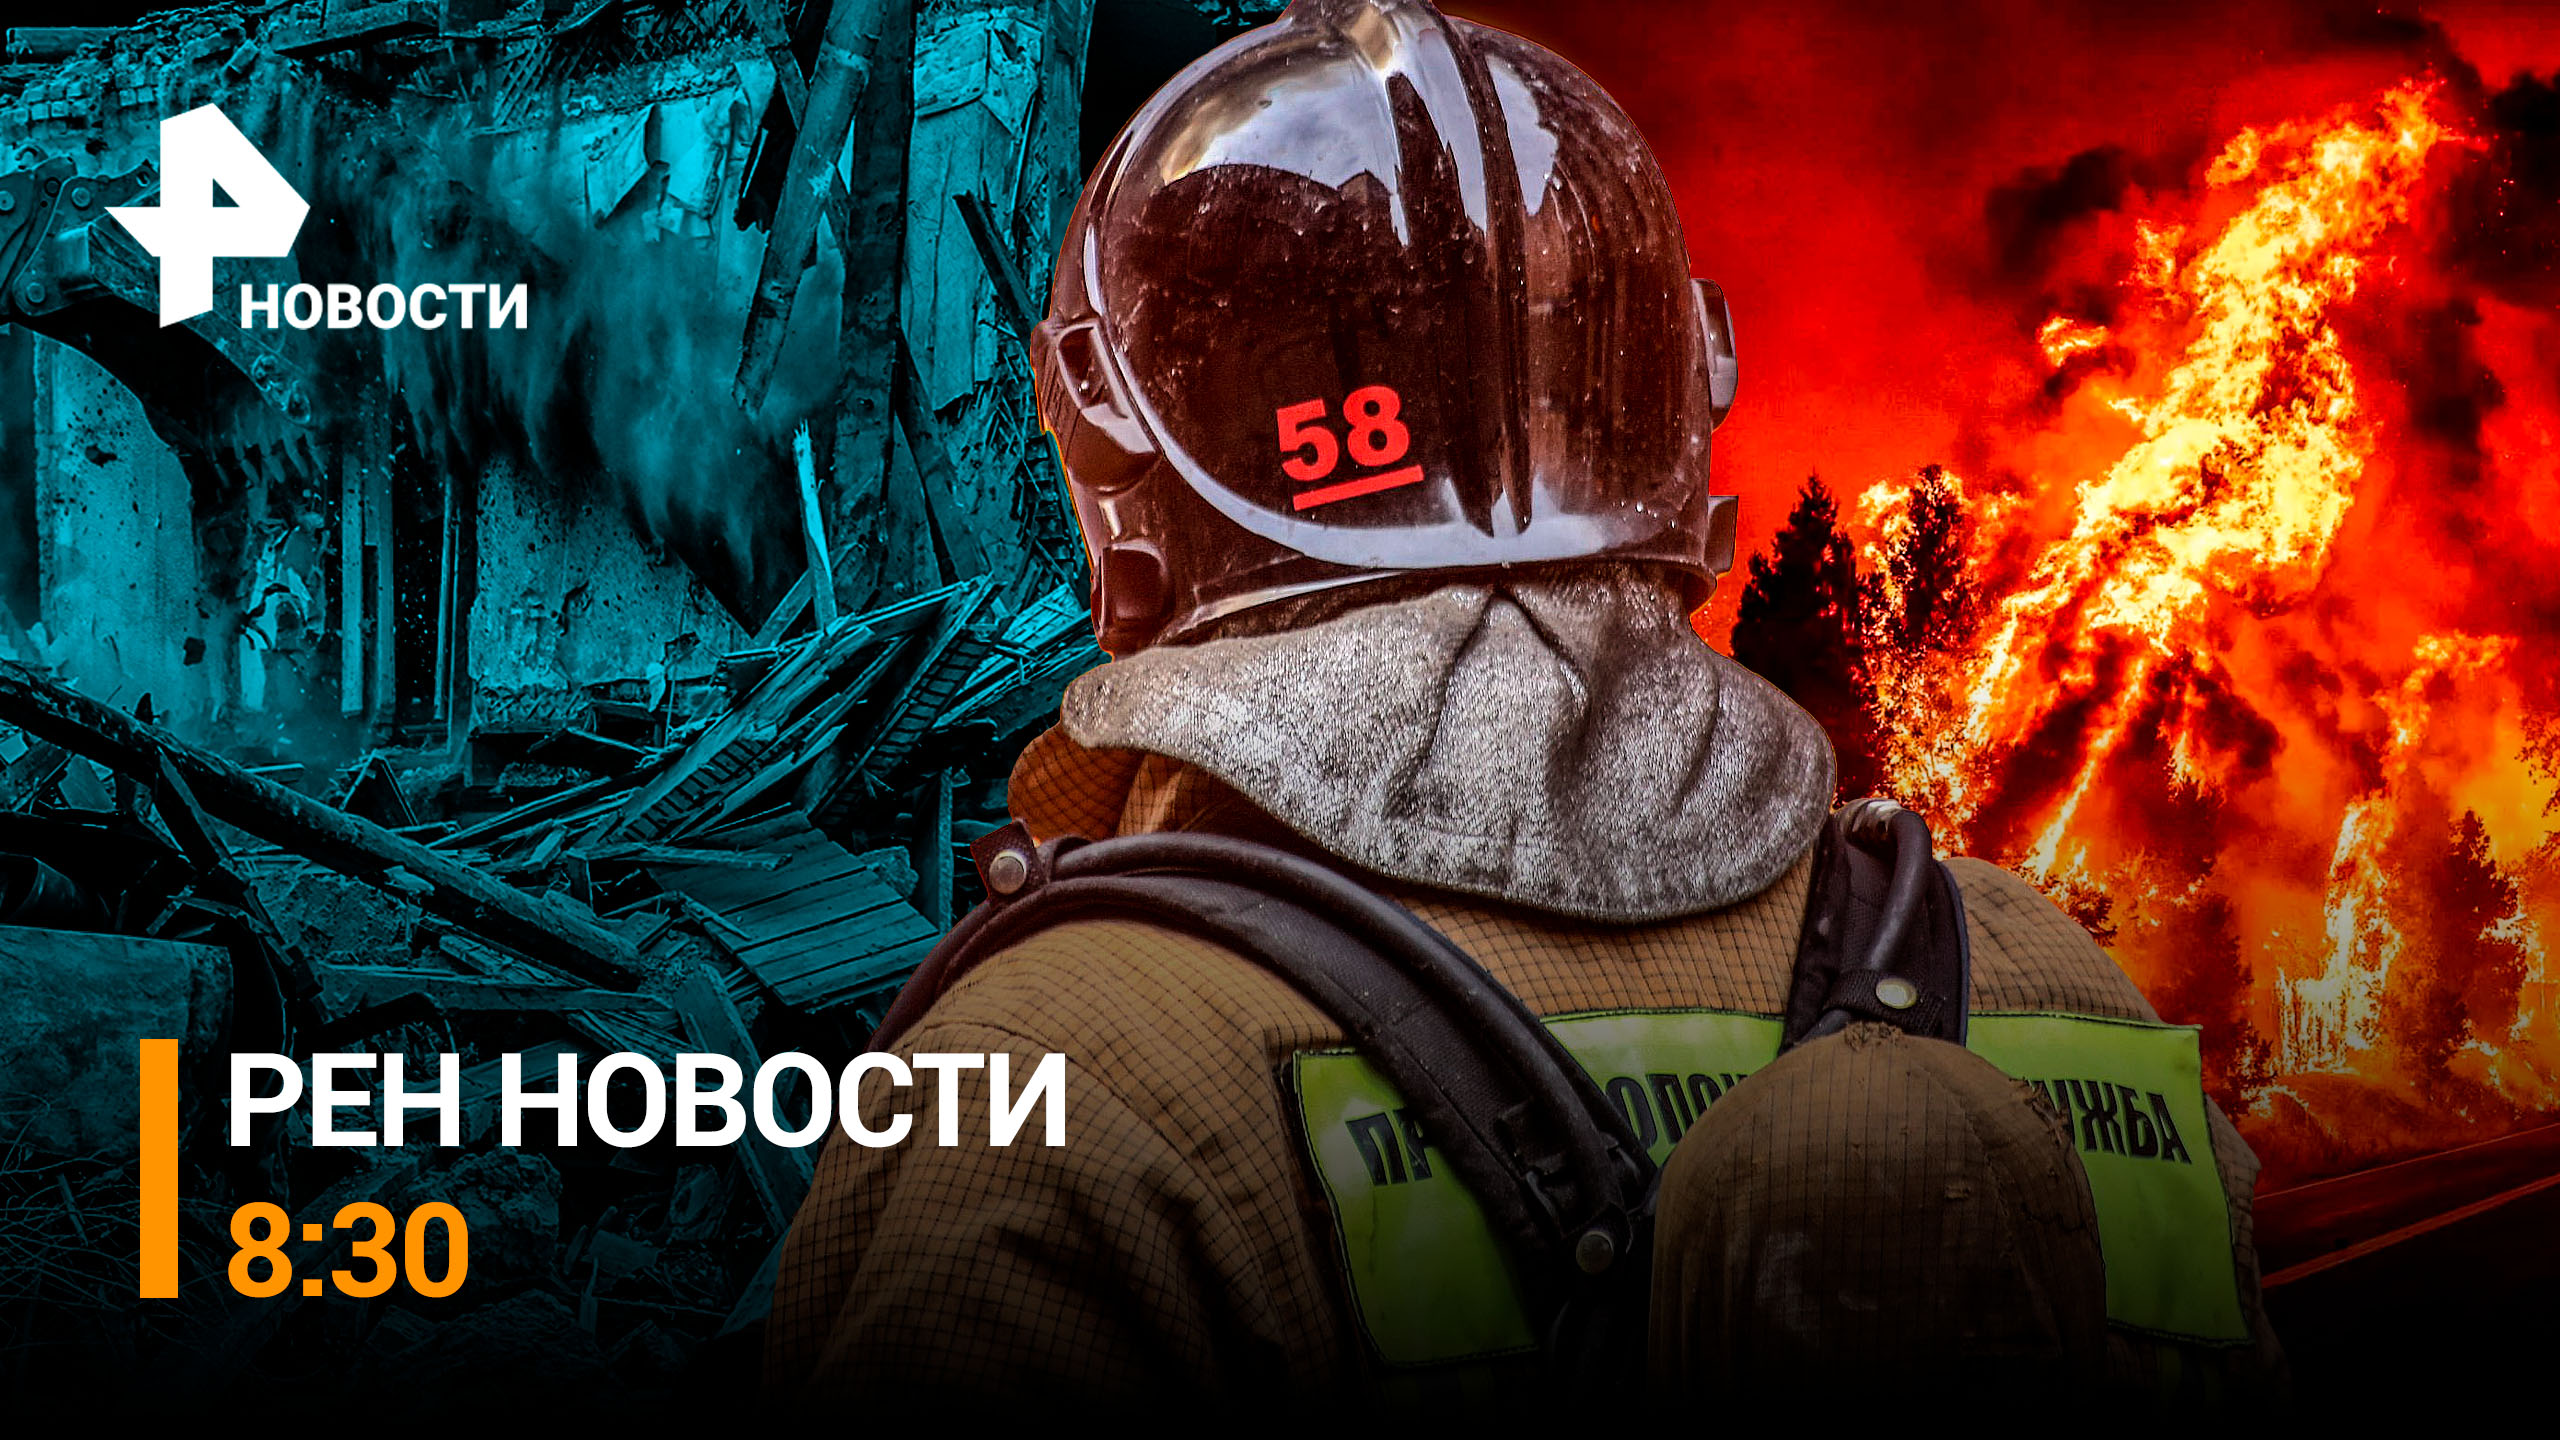 Удар ВСУ по пекарне в Лисичанске продолжил террор Киева / РЕН НОВОСТИ 8:30 от 05.02.24